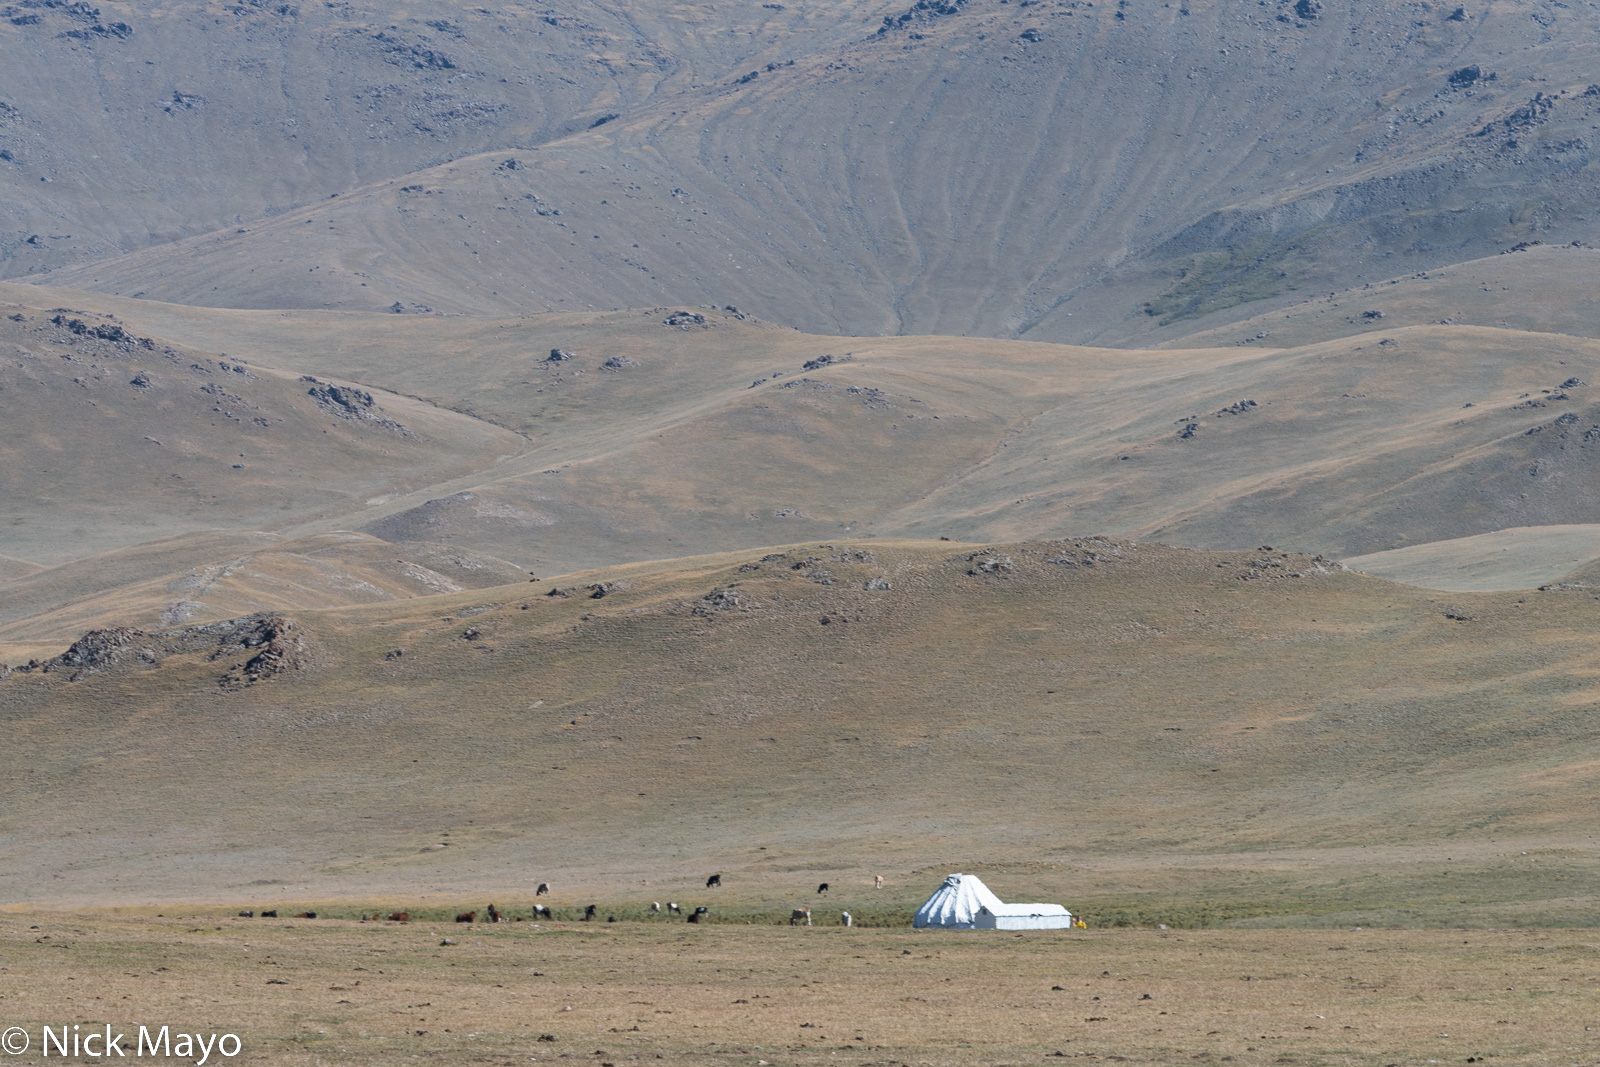 A yurt on the Son Kul grassland.